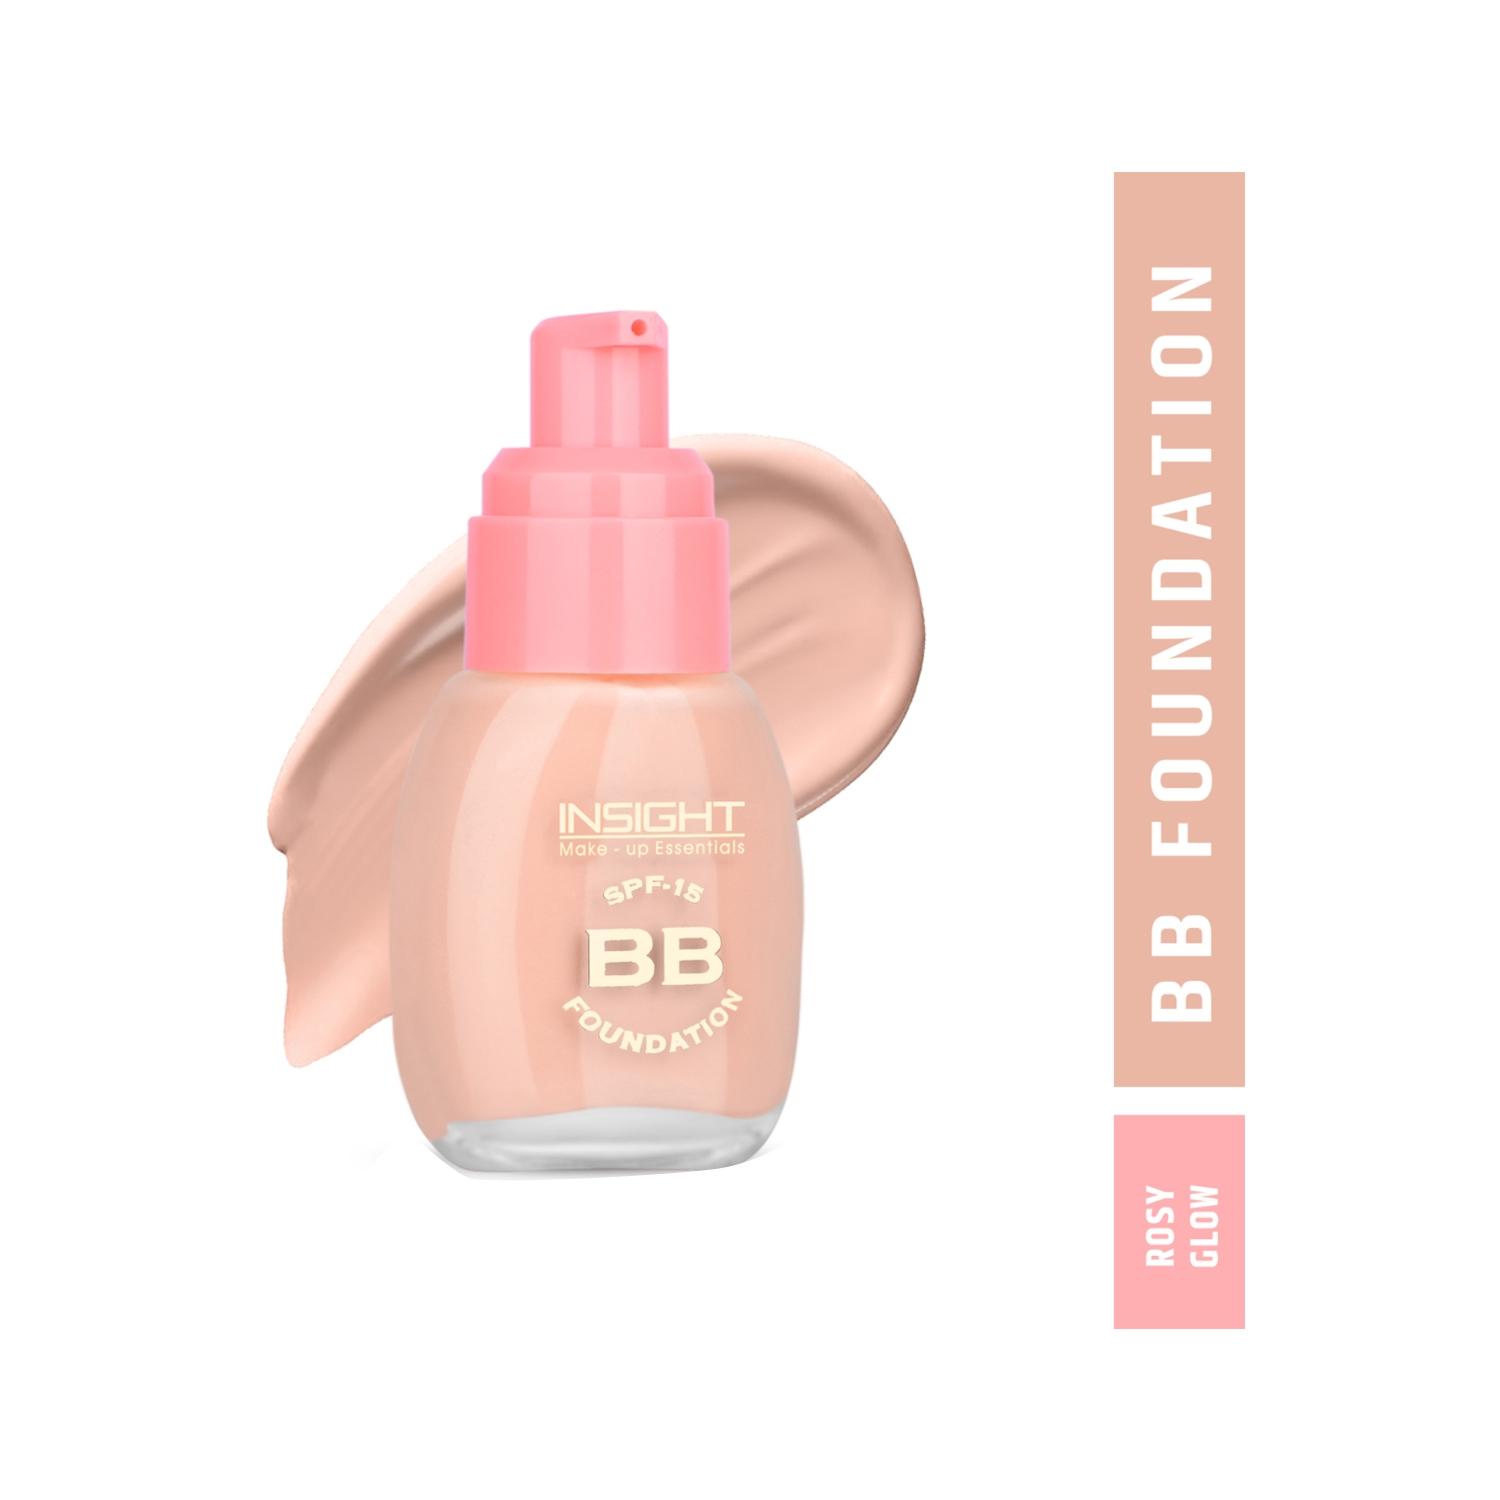 insight cosmetics bb foundation spf 15 - rosy glow (30ml)